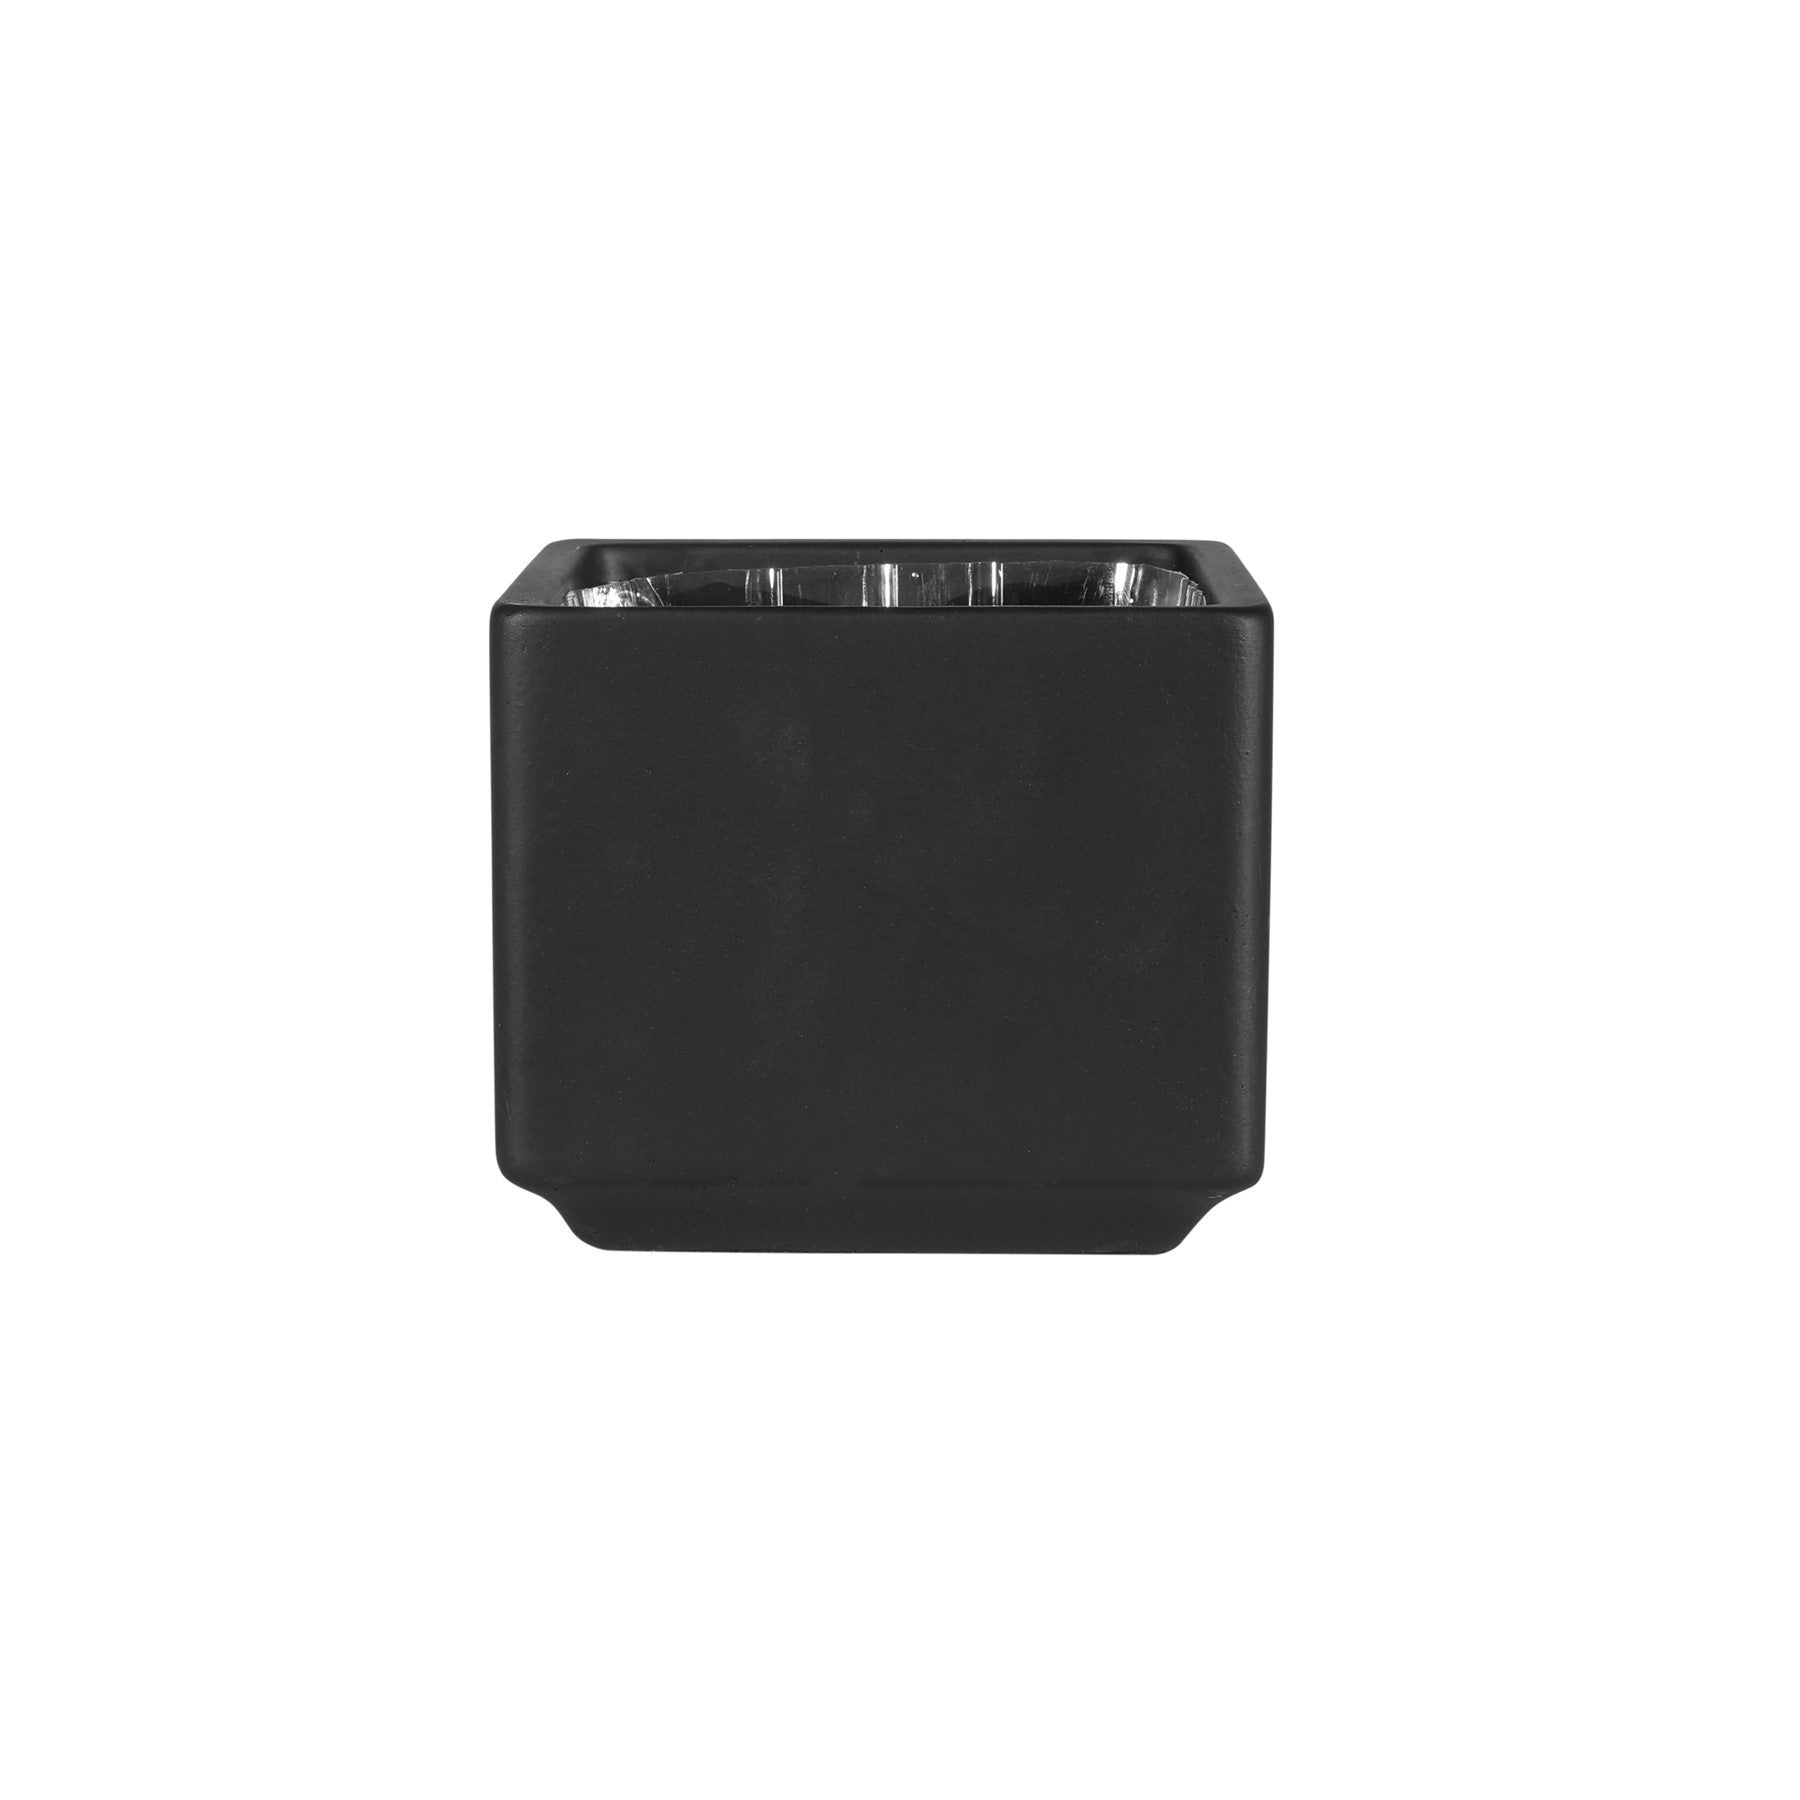 View Moda Black Cube Planter 11cm x 13cm information